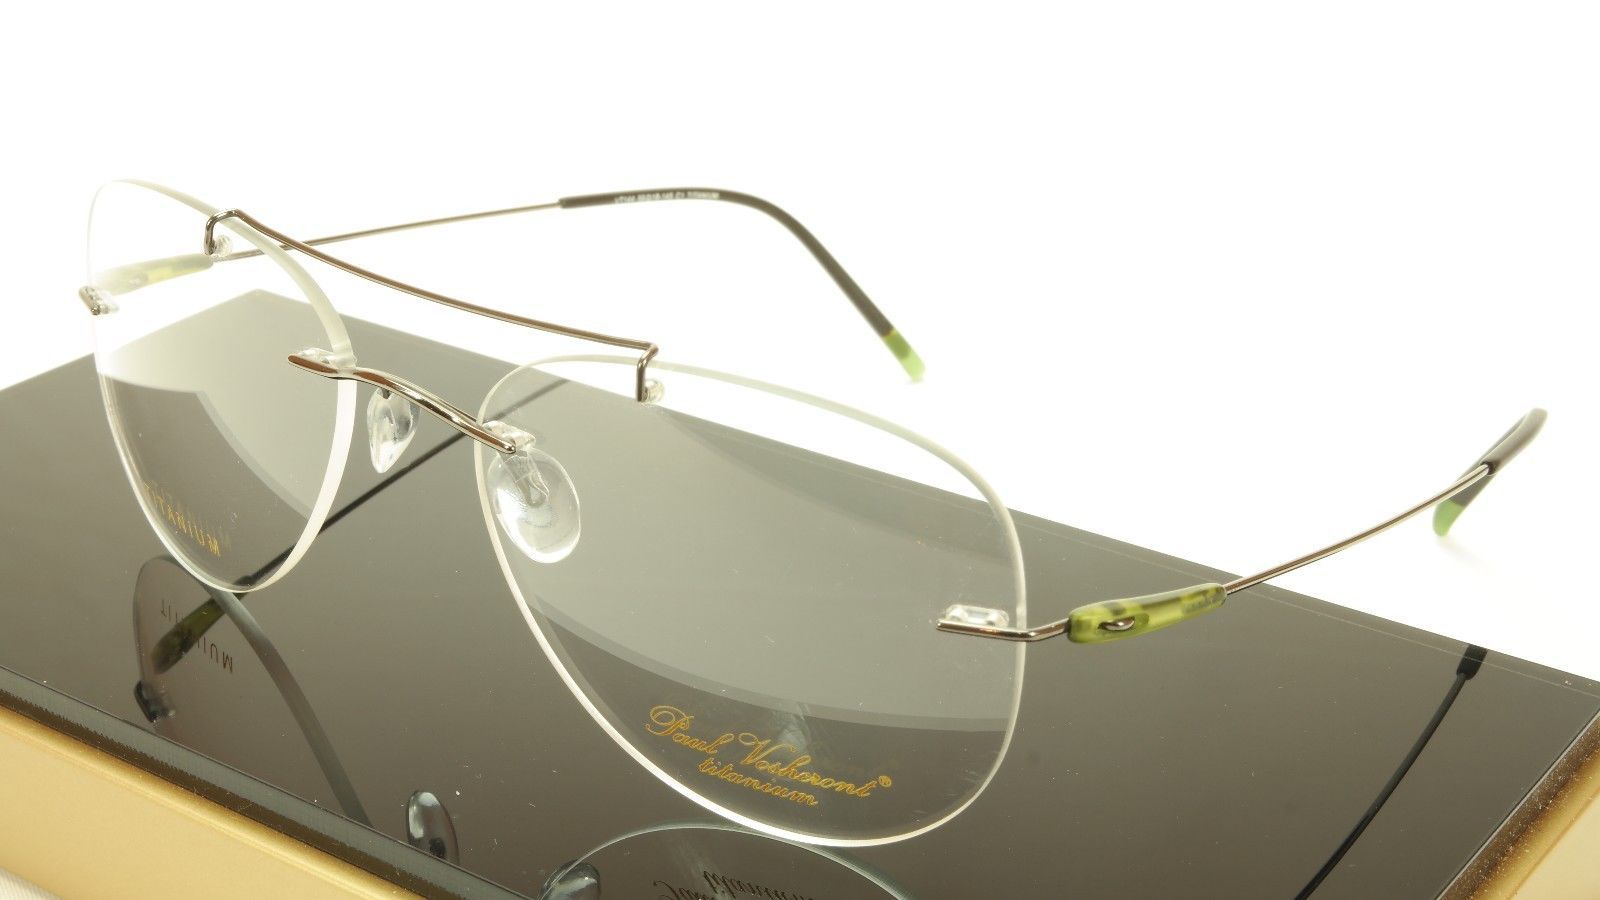 Authentic Paul Vosheront VT144 C1 Titanium Gunmetal Eyeglasses Frame Italy Made - $220.00